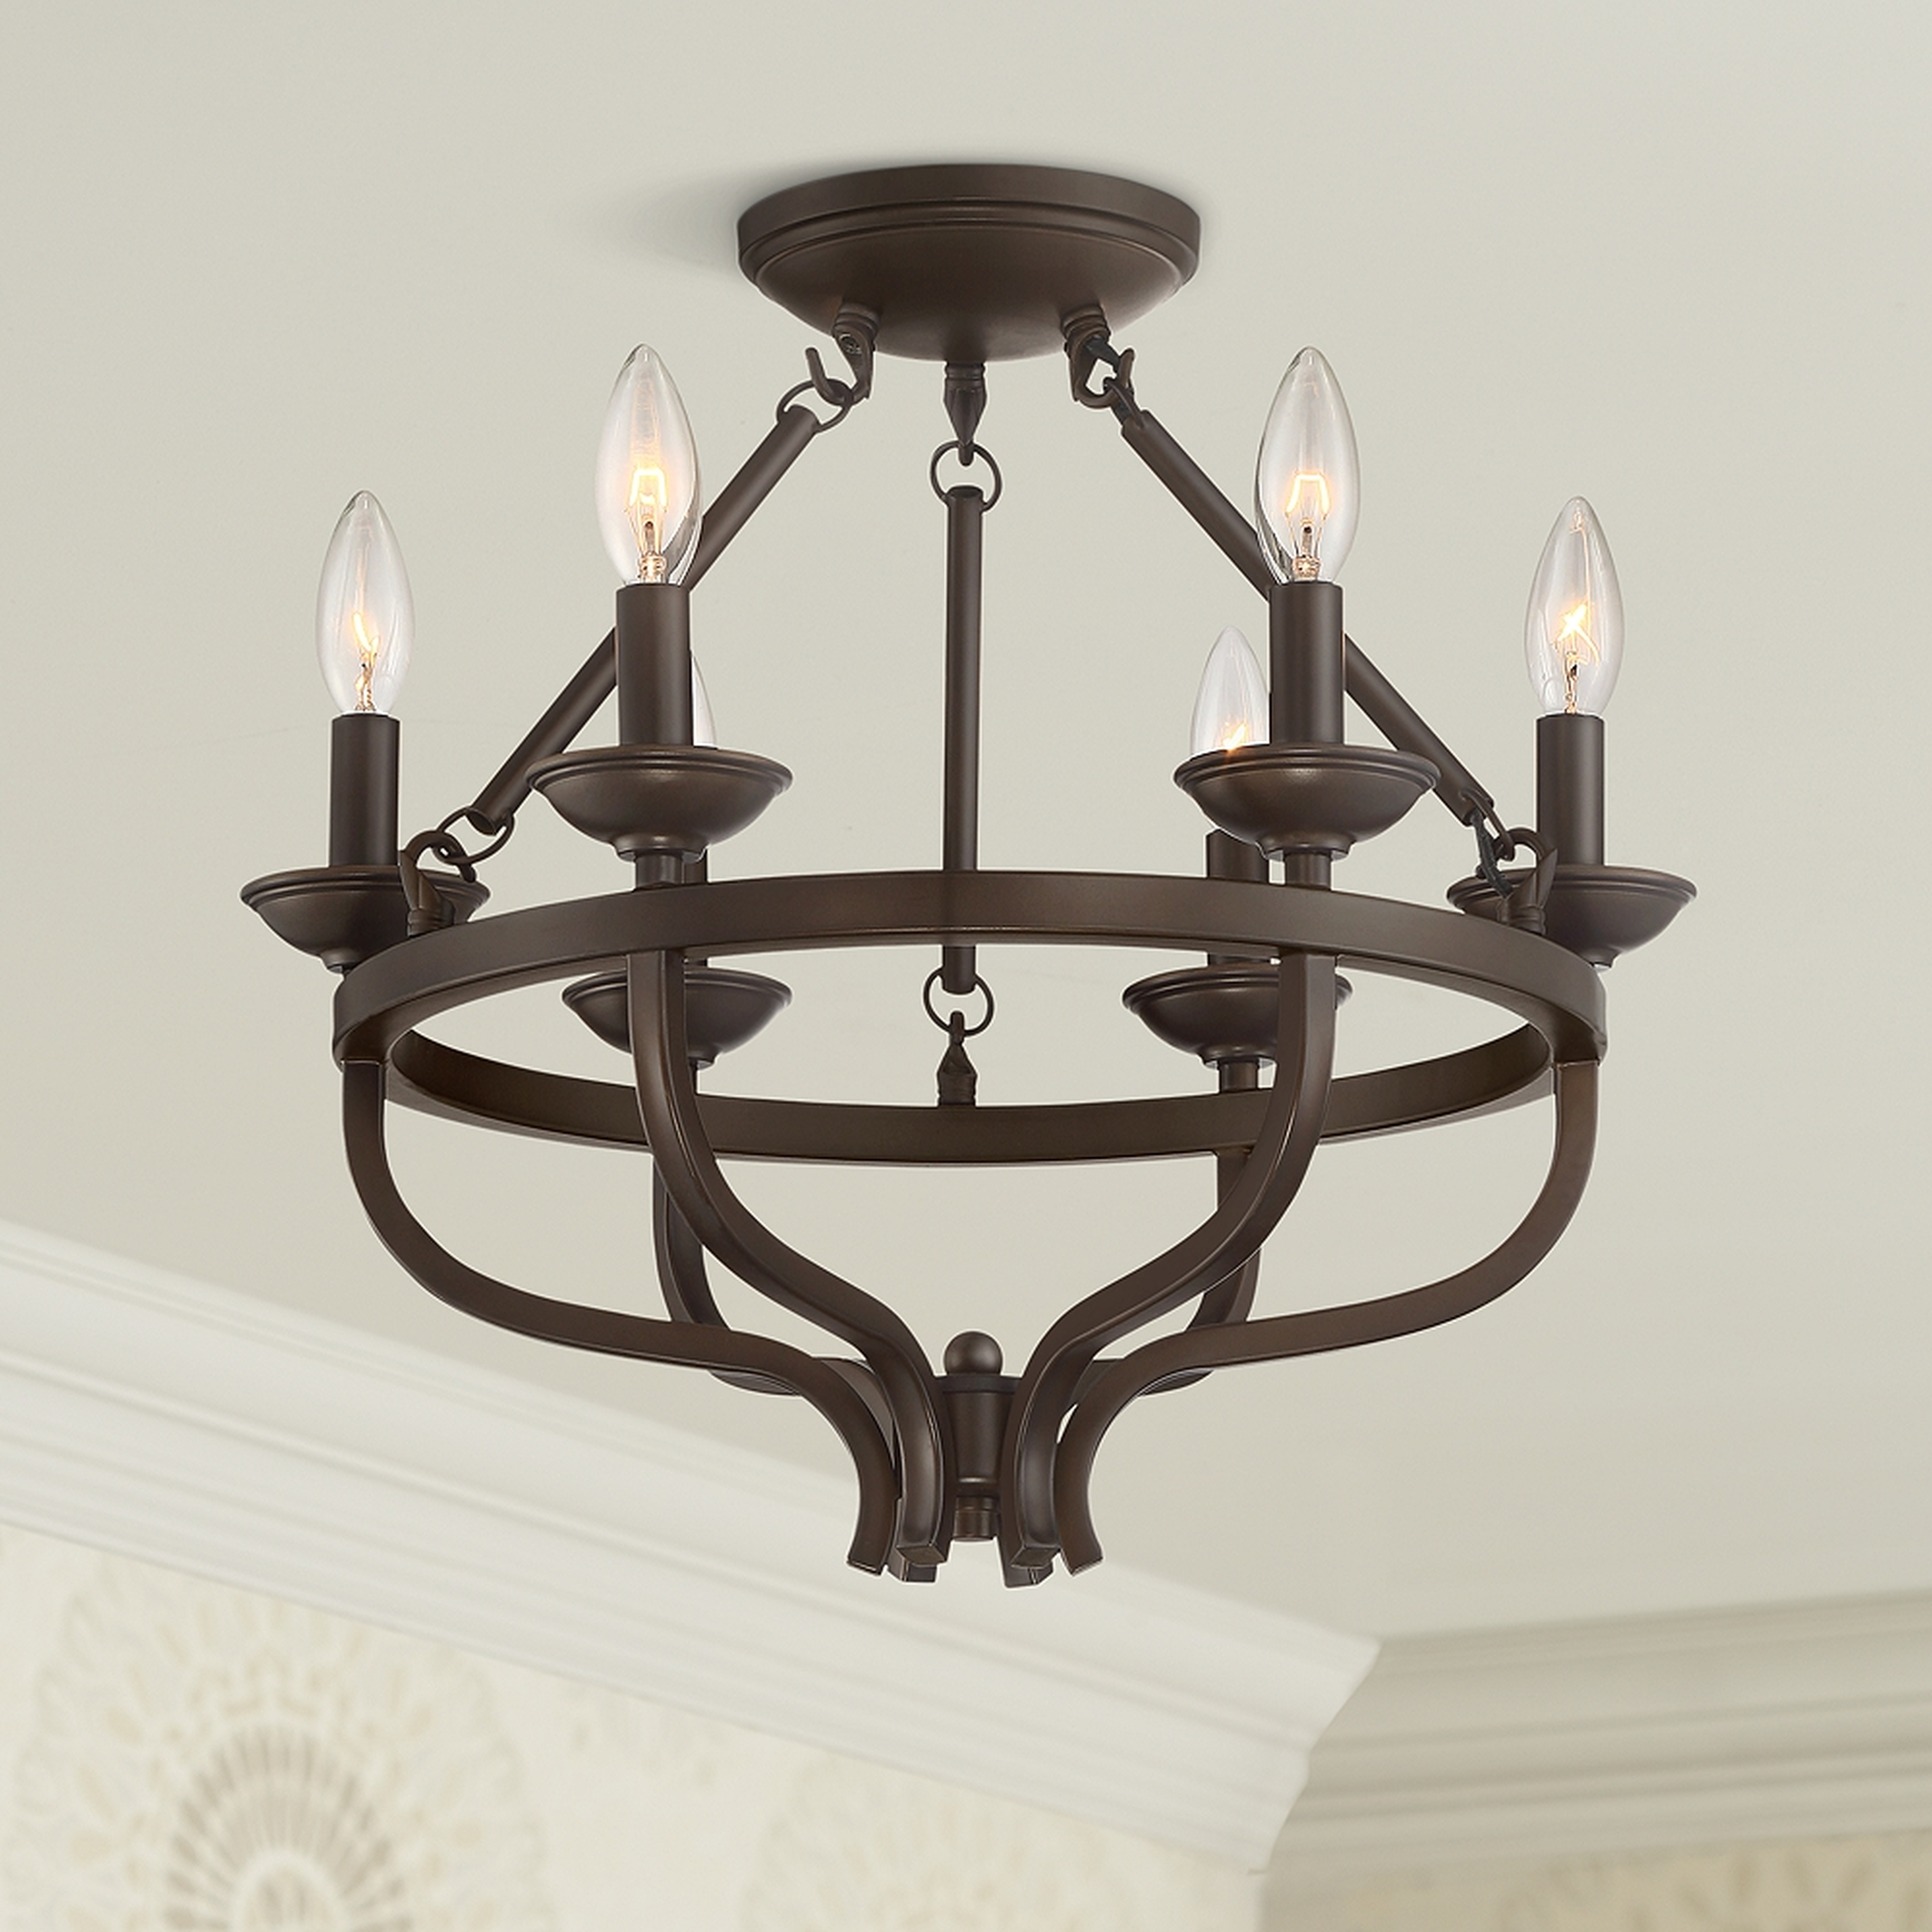 Adari 17 3/4" Wide Oil-Rubbed Bronze Ceiling Light - Style # 70D95 - Lamps Plus